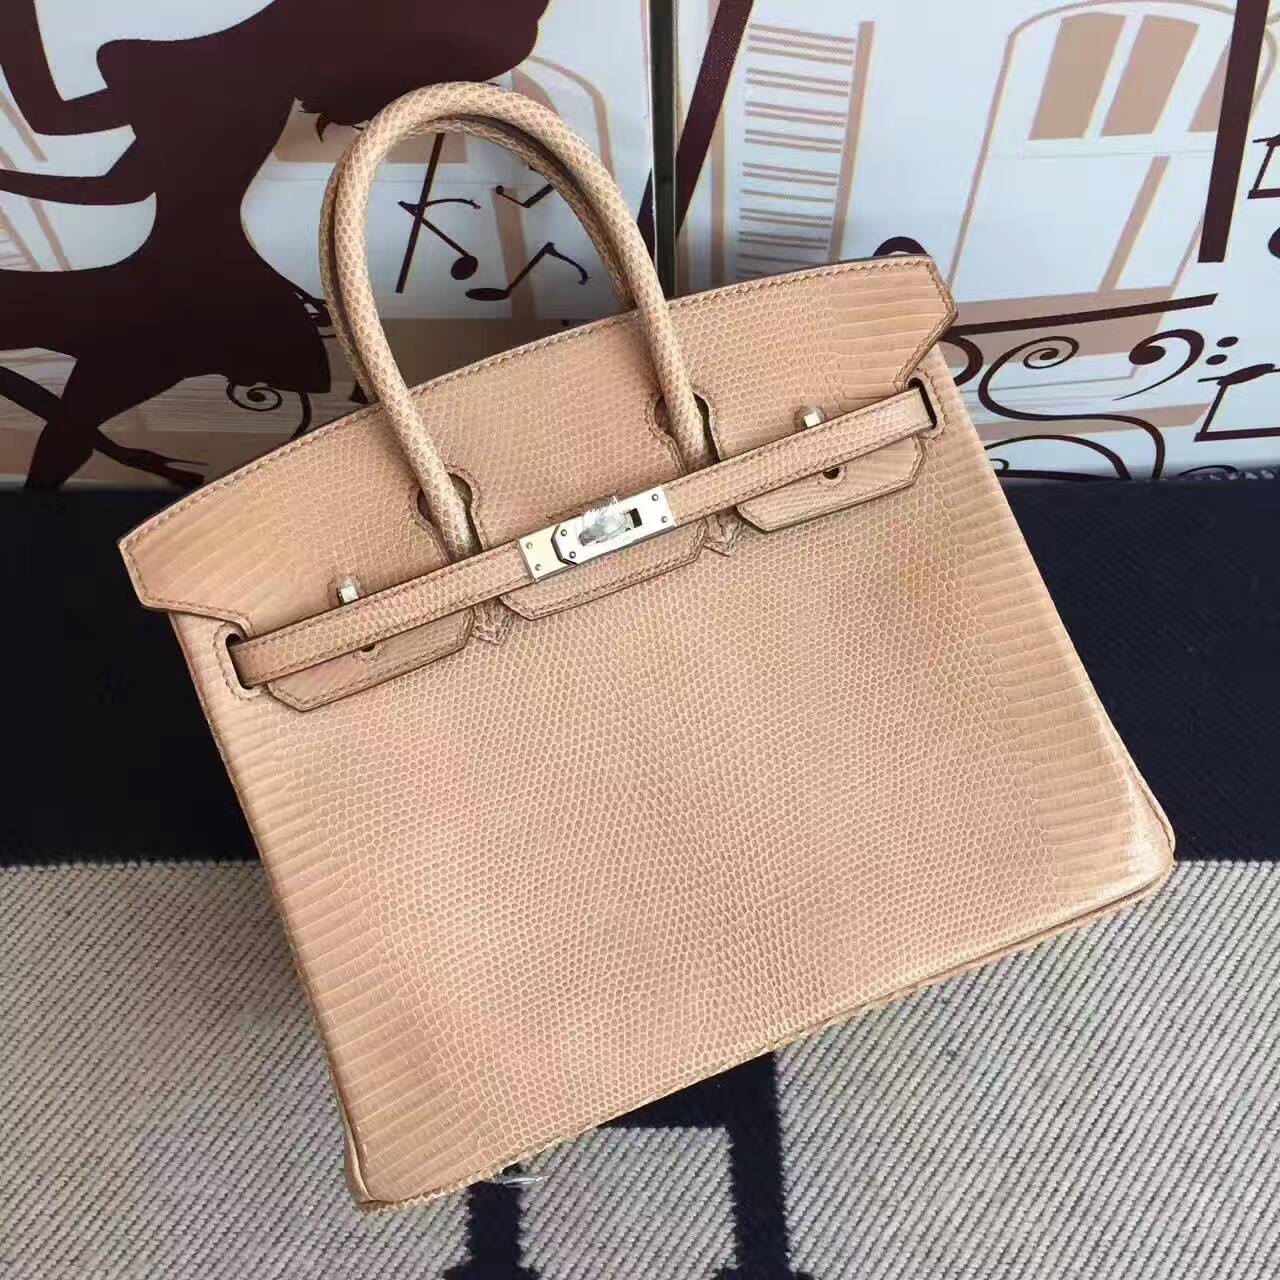 Wholesale Hermes Bag Apricot Lizard Shiny Leather Birkin25cm Handbag